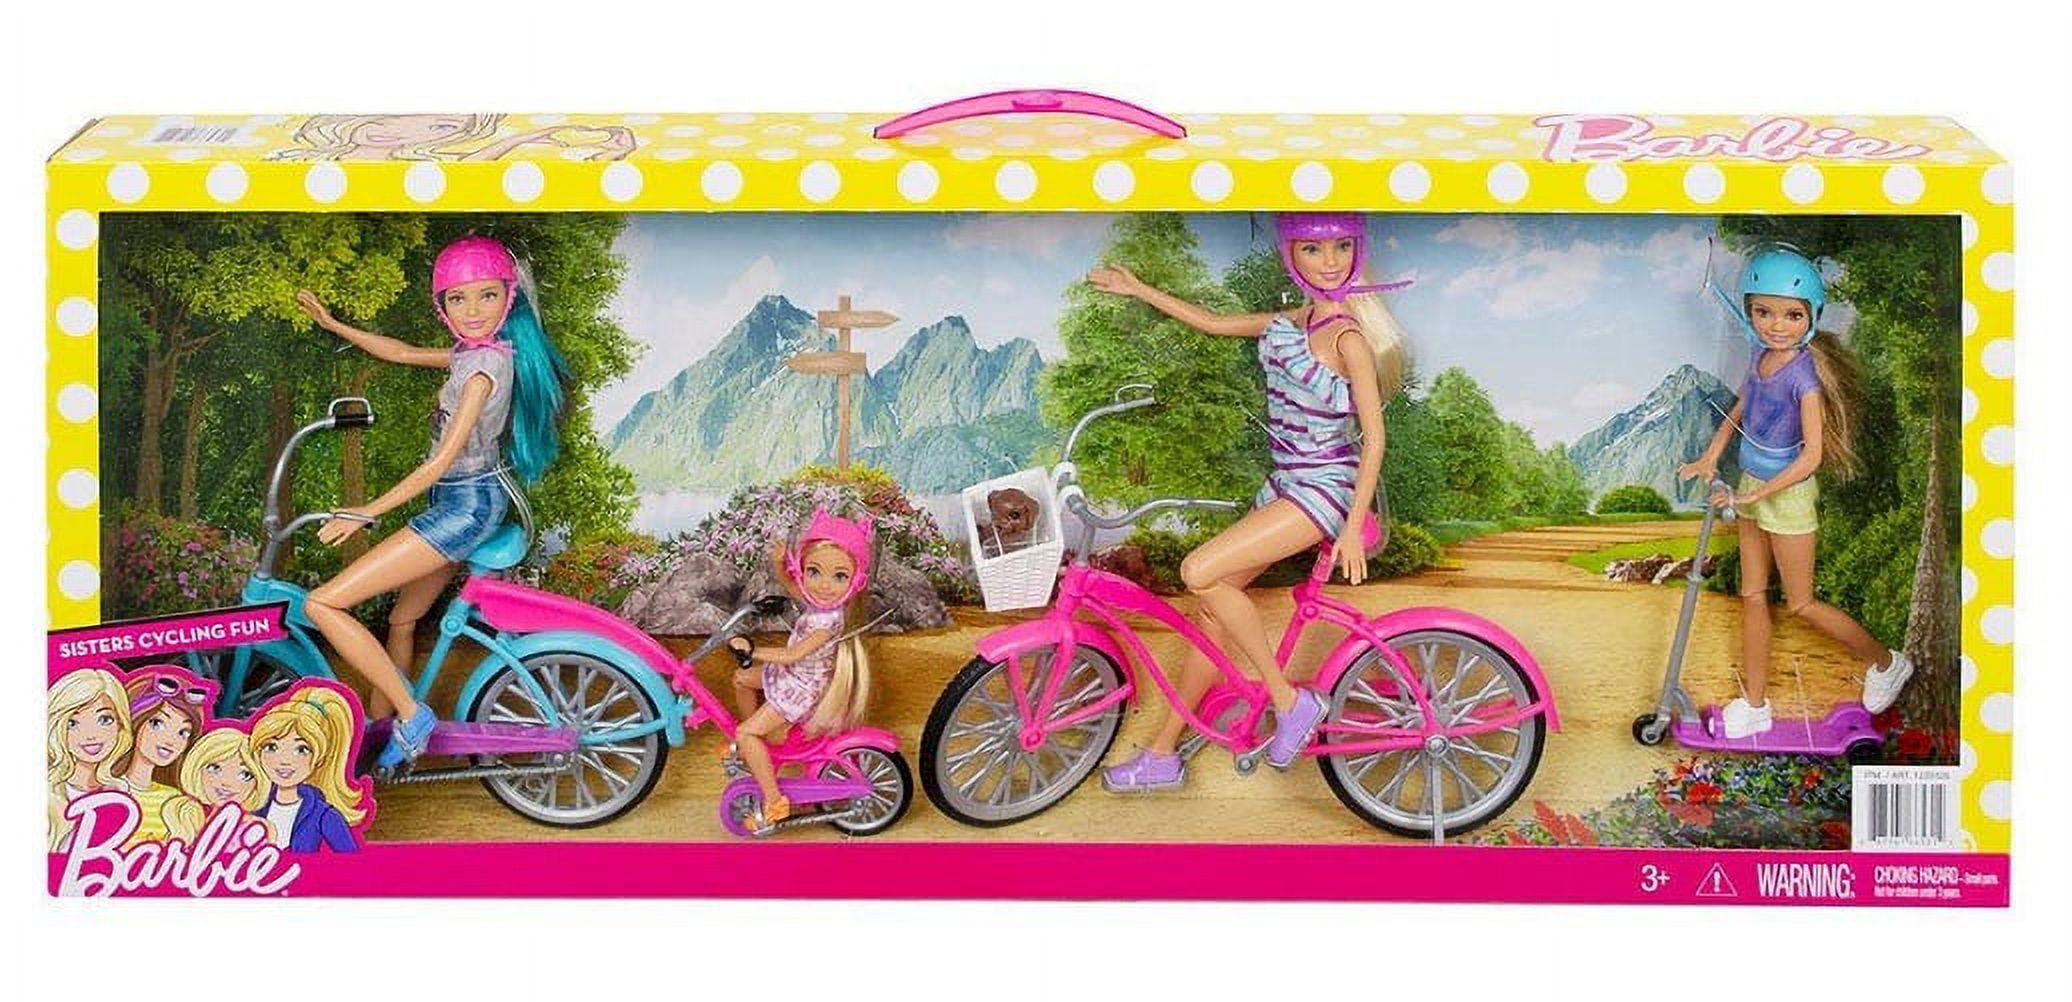 My sister bikes. Куклы Барби сайклс. Кукла Барби на велосипеде. Кукла Барби с велосипедо.